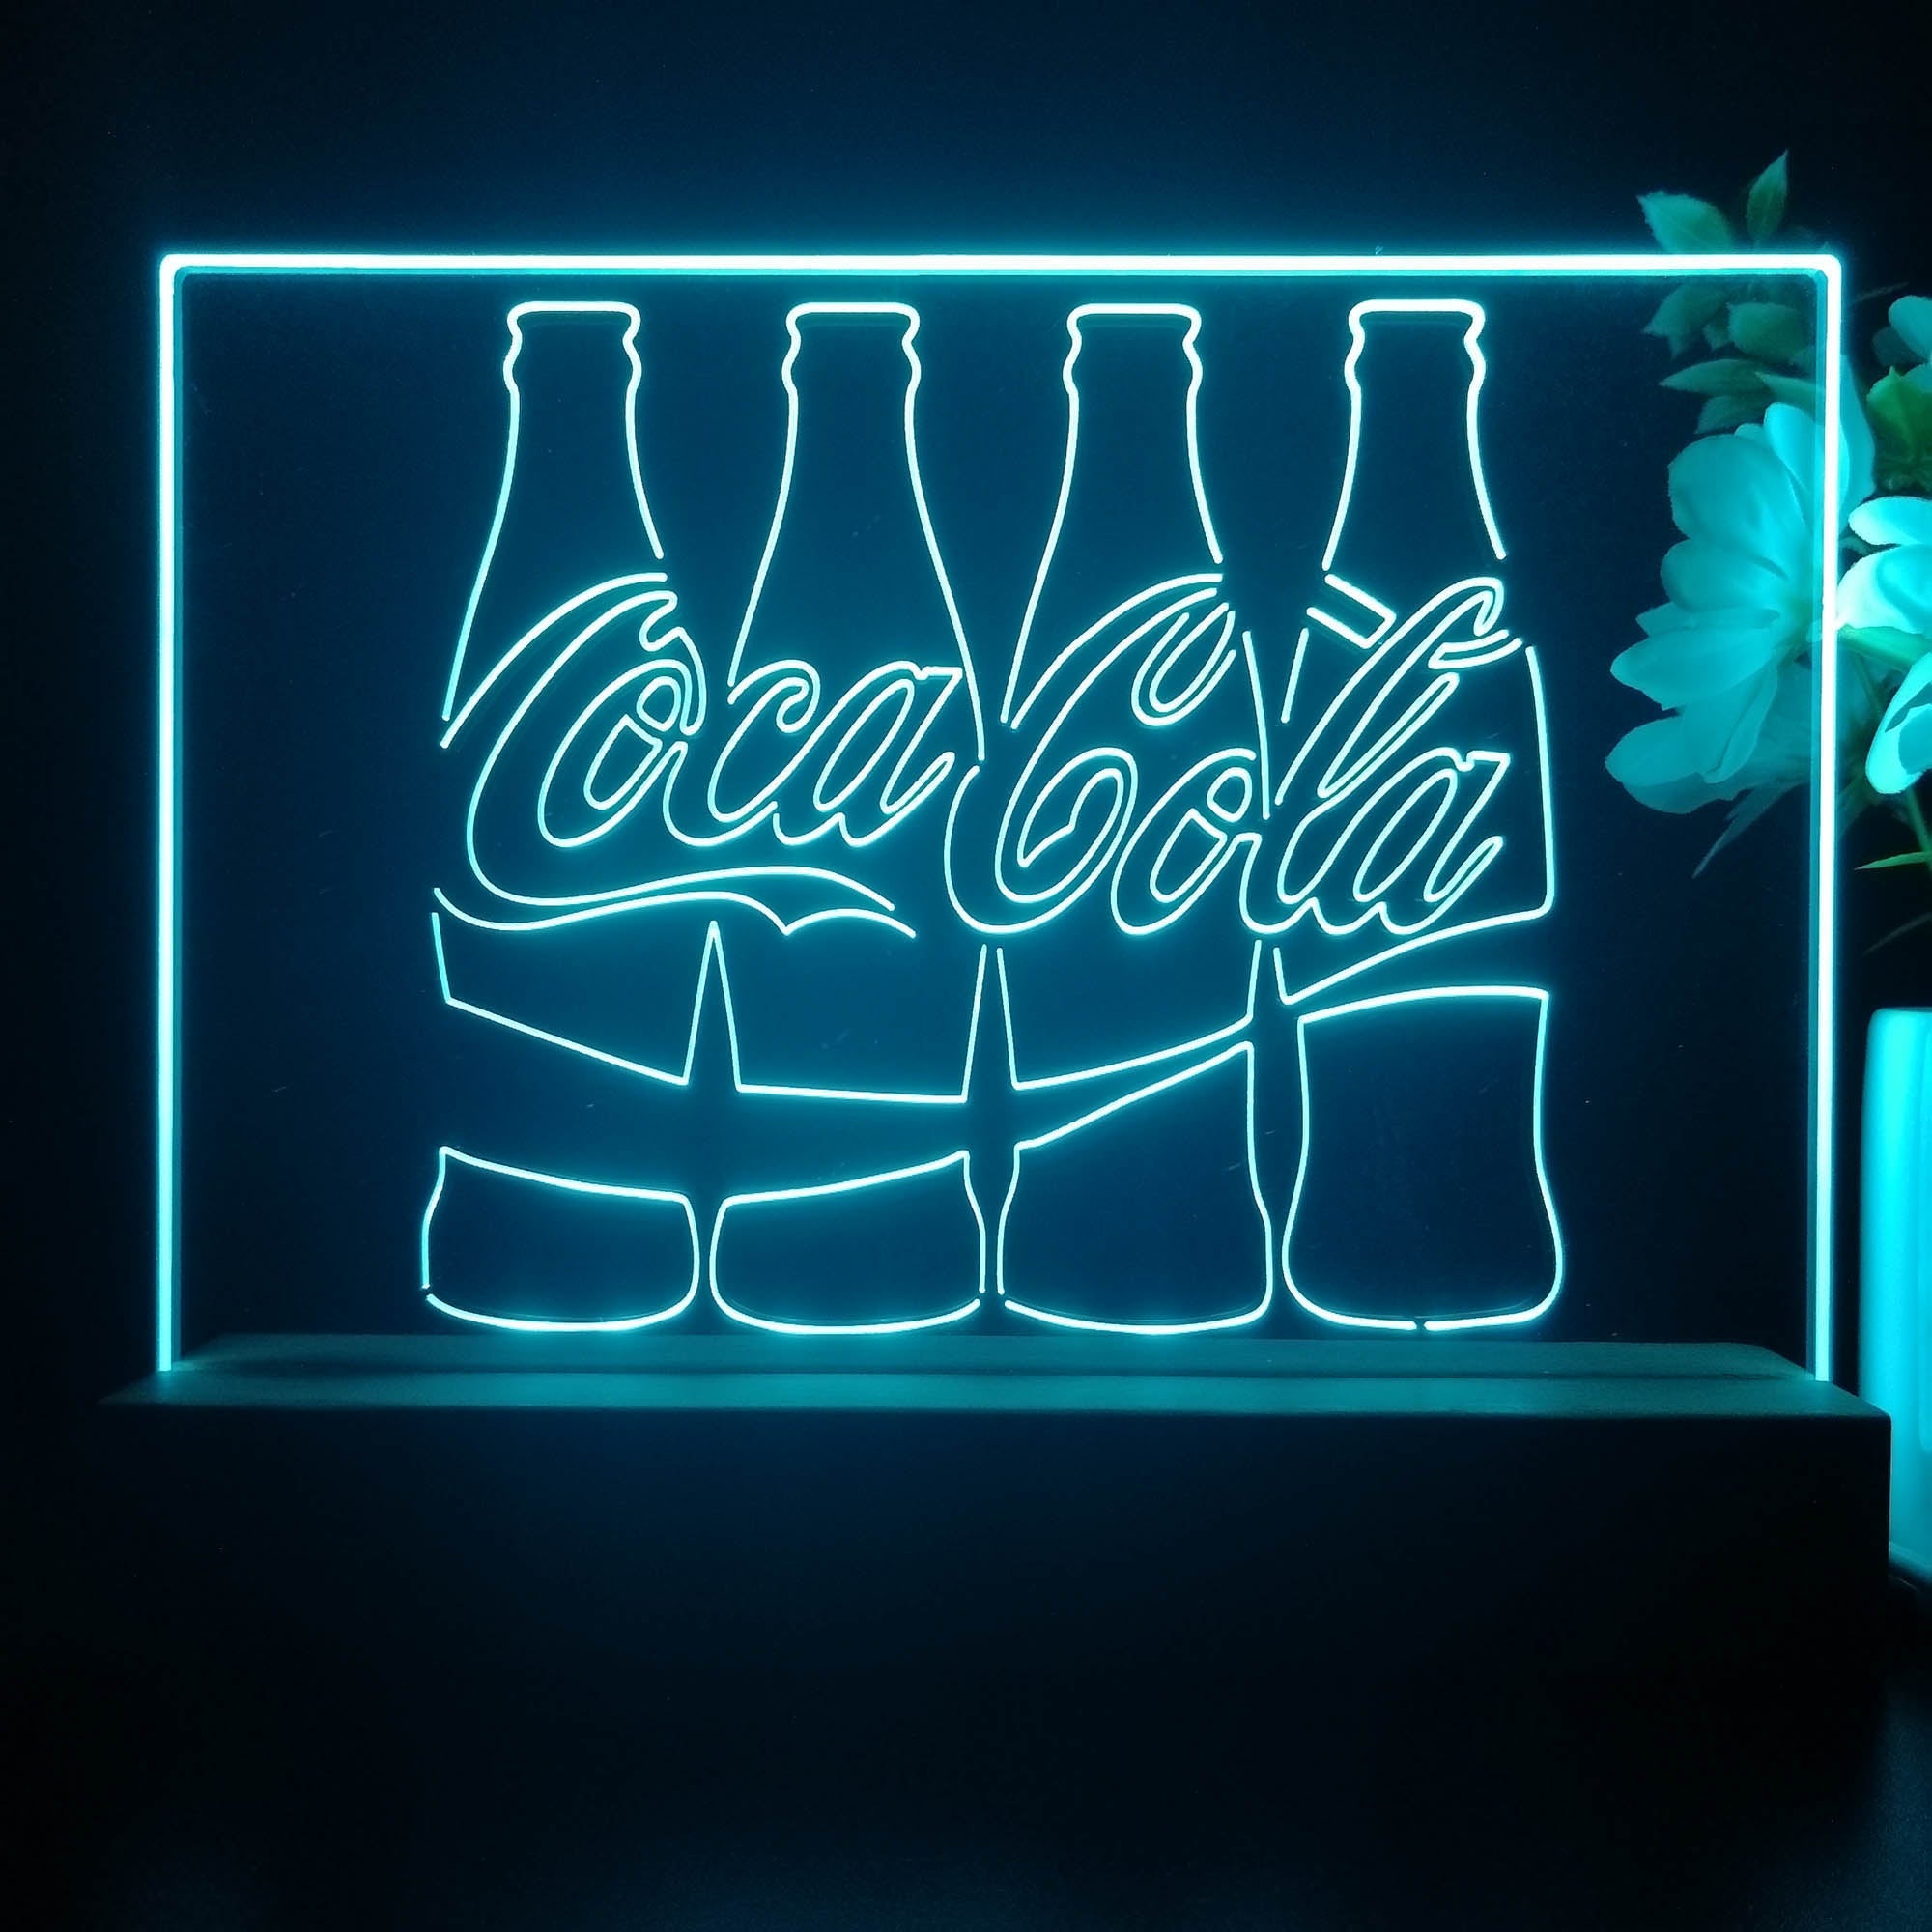 Coca Cola Bottles Neon Sign Pub Bar Decor Lamp